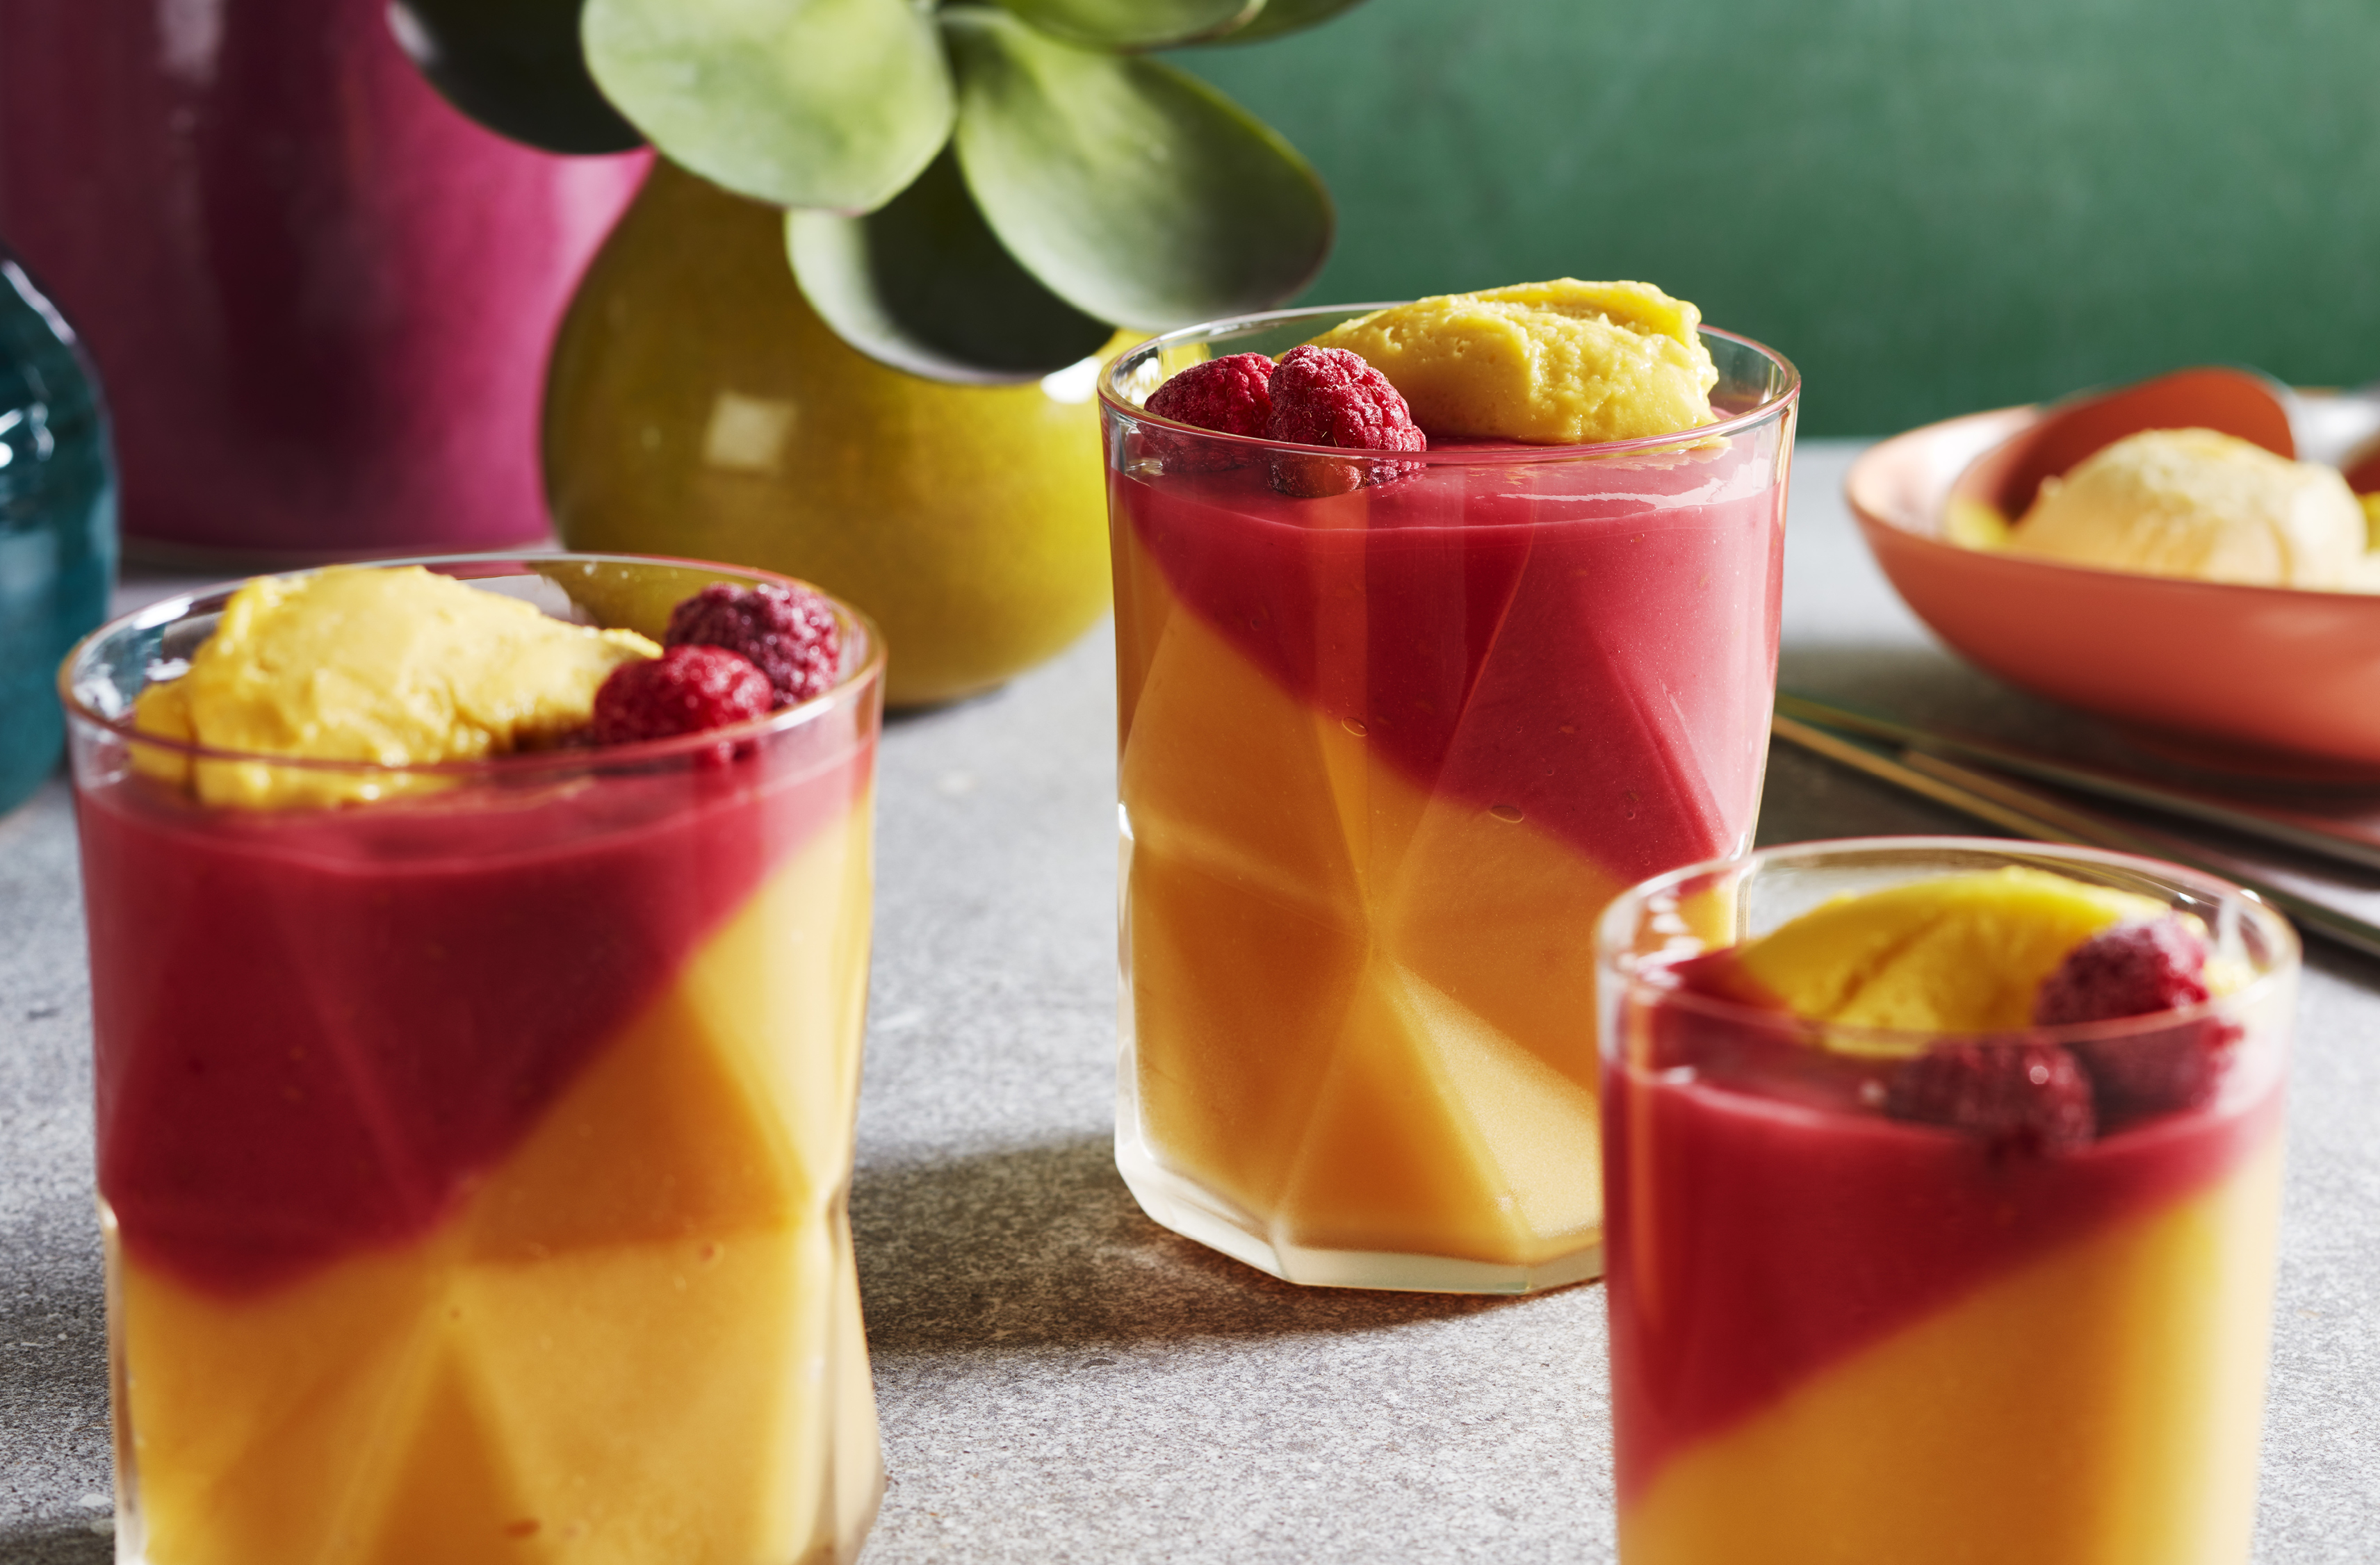 3 glasses of mango melba shake garnished with fresh raspberries